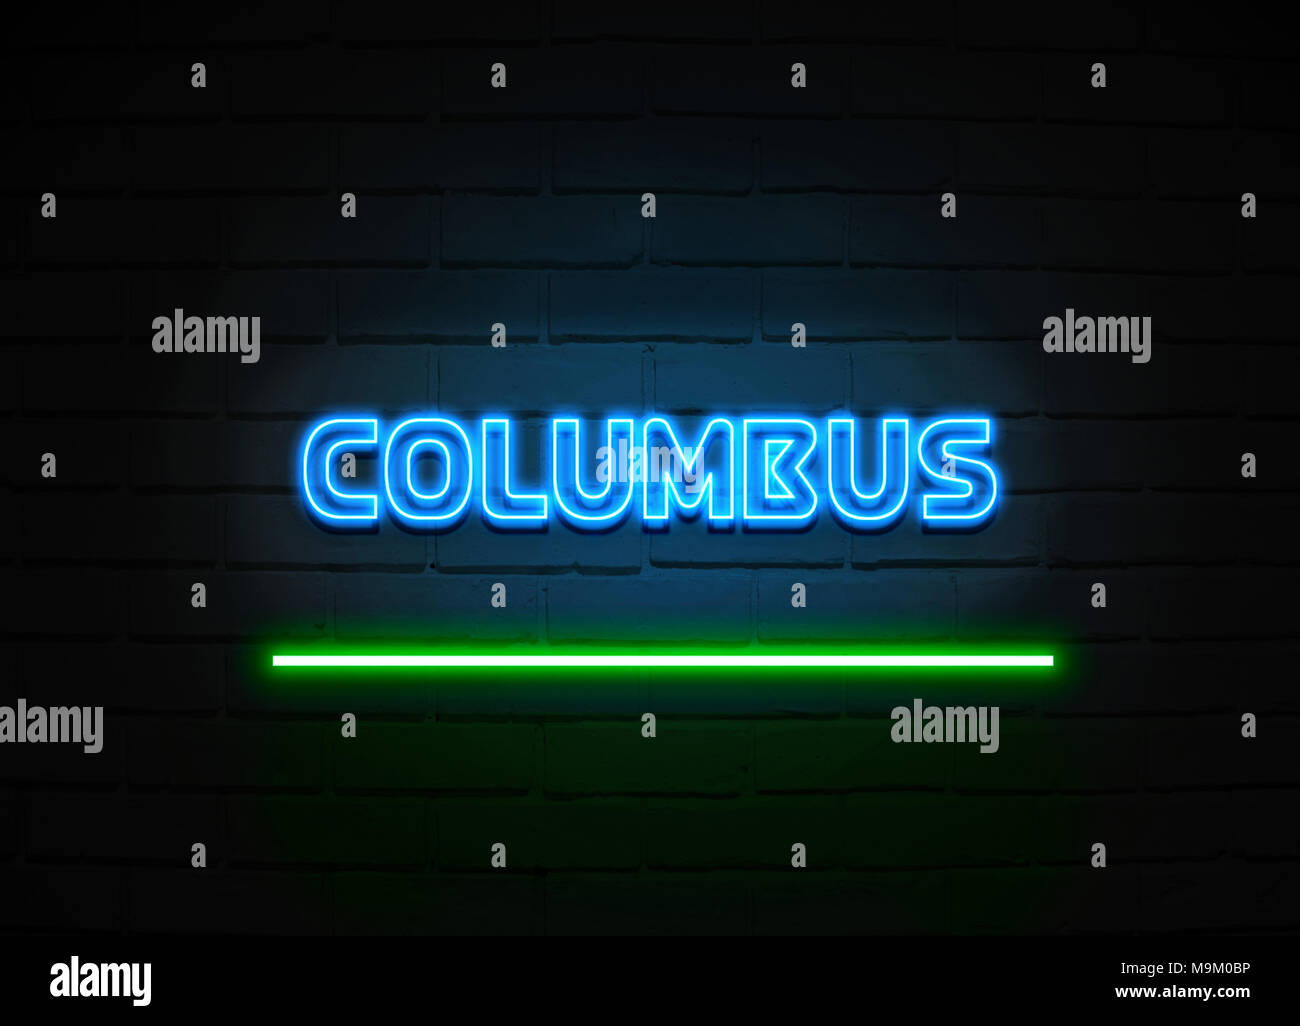 Columbus Leuchtreklame - glühende Leuchtreklame auf brickwall Wand - 3D-Royalty Free Stock Illustration dargestellt. Stockfoto